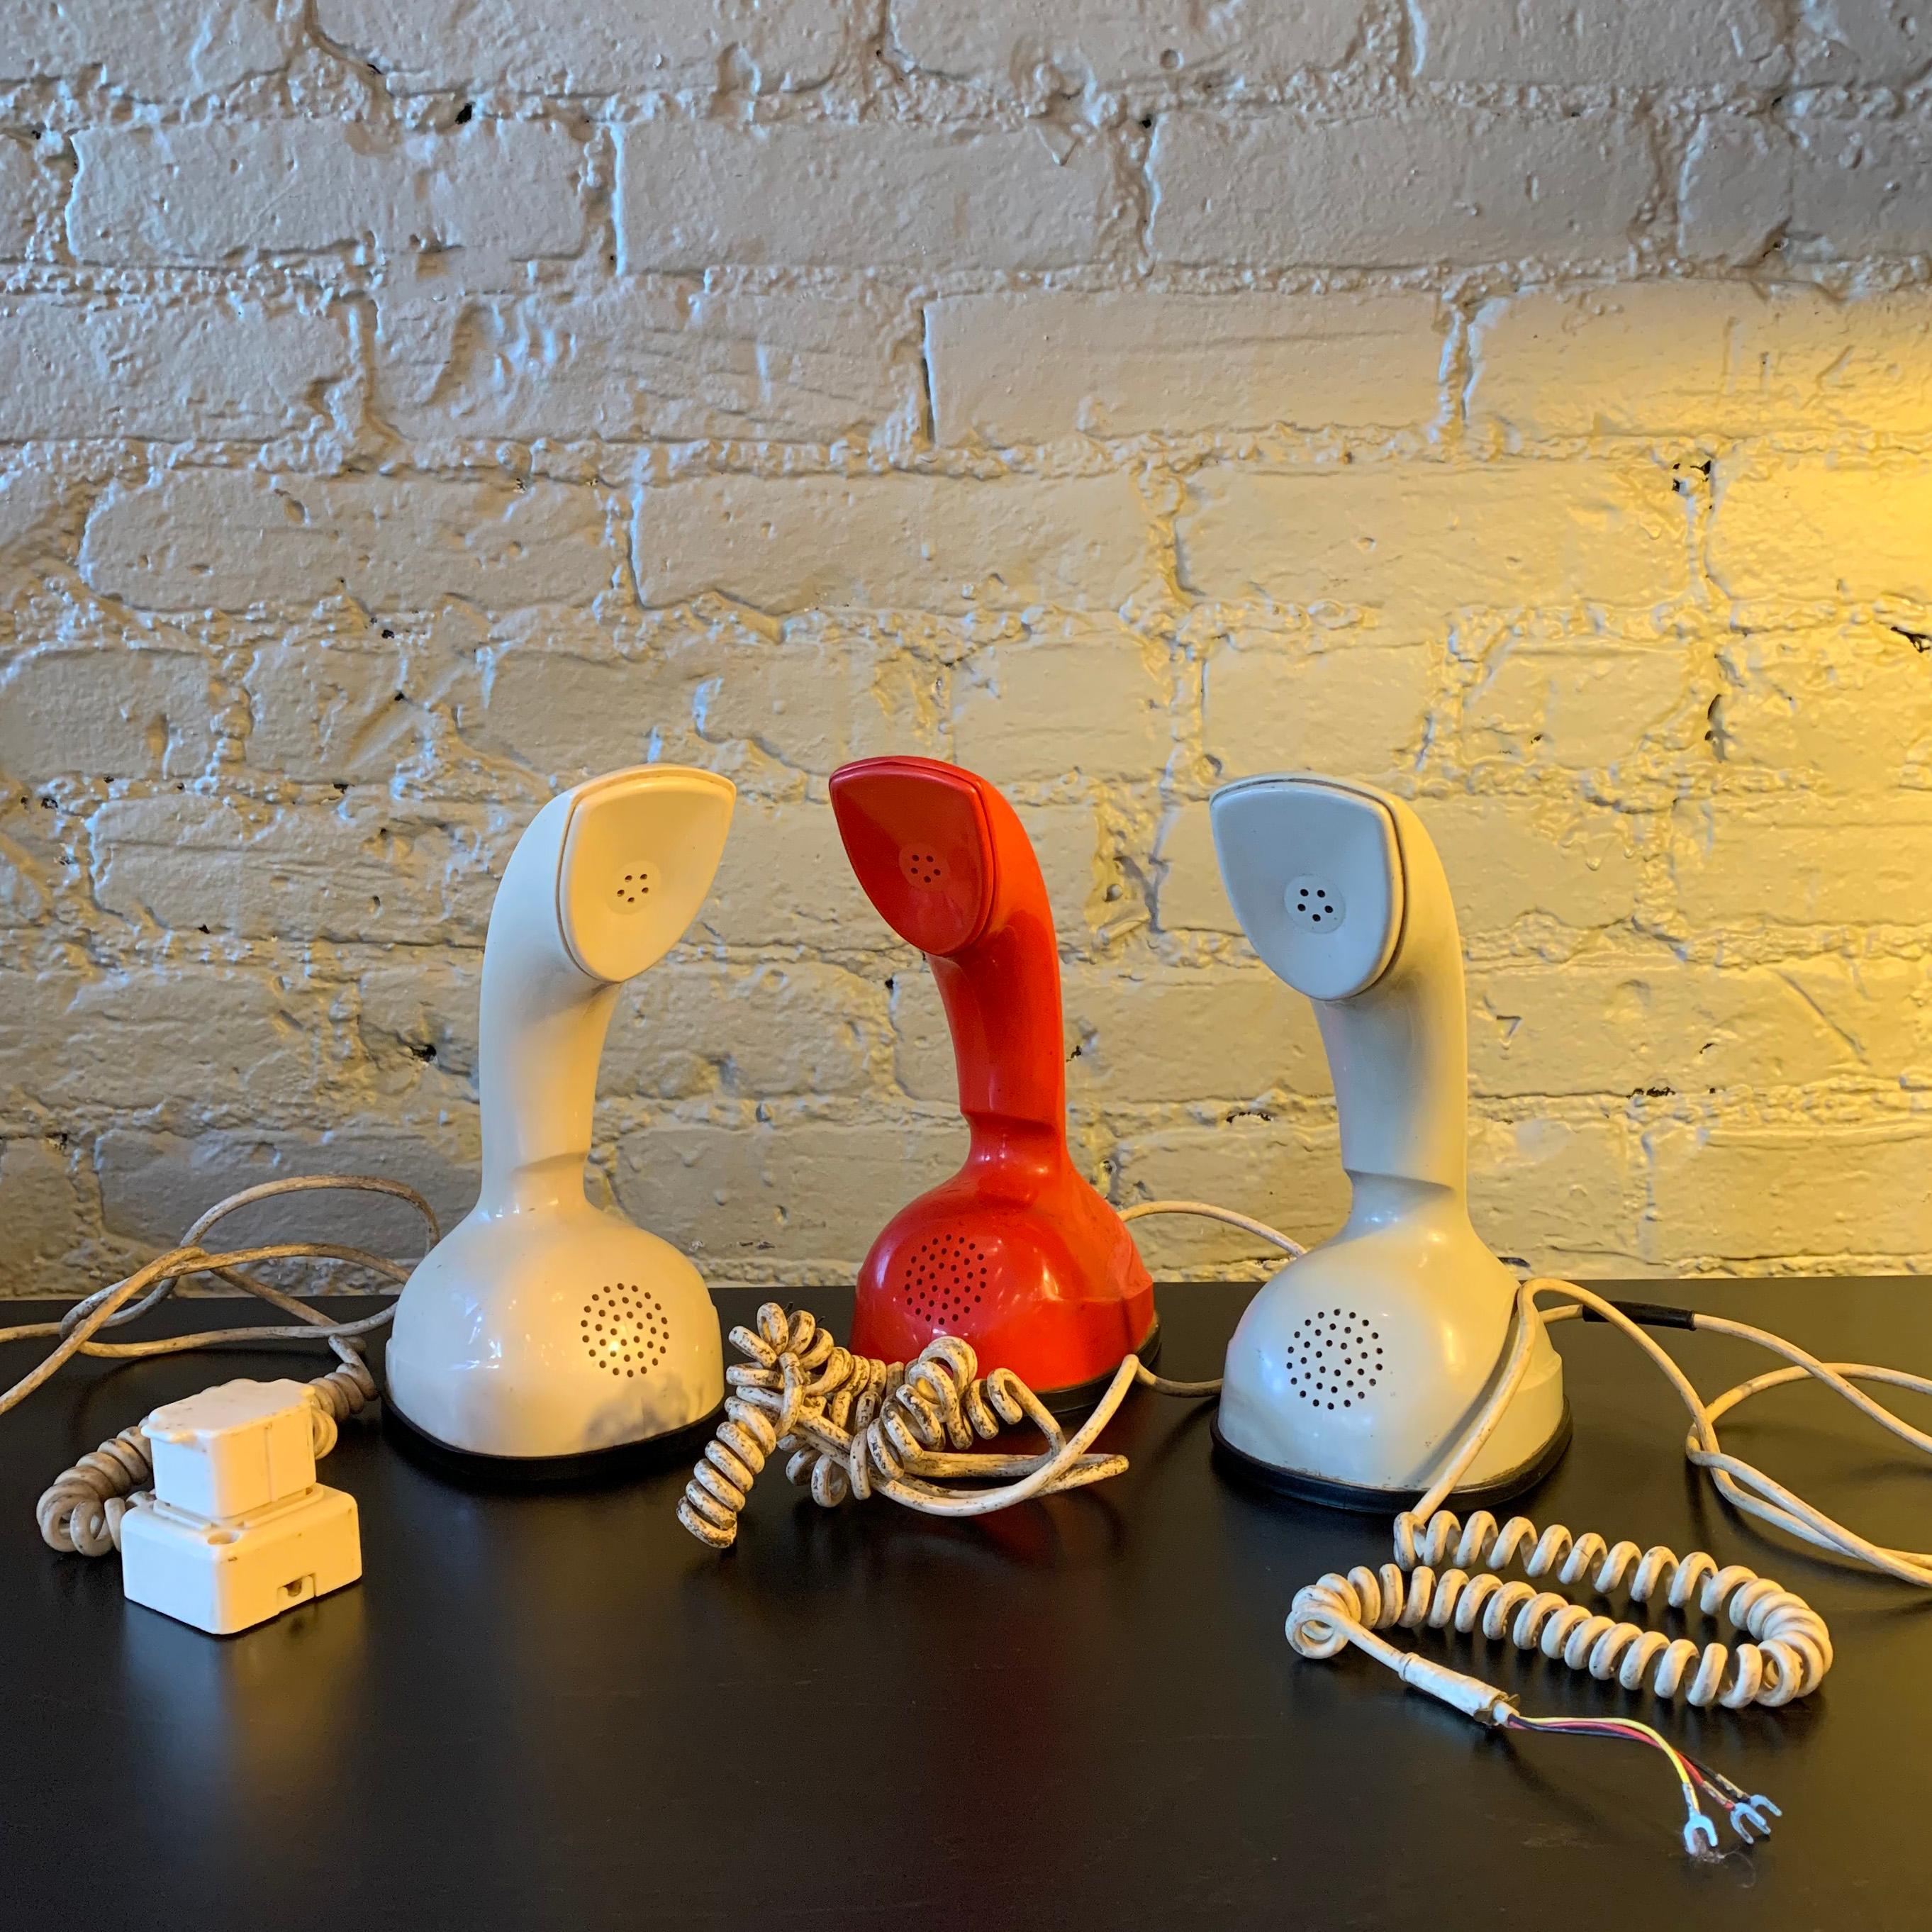 20th Century Modern One-Piece Ericofon Telephone, Red